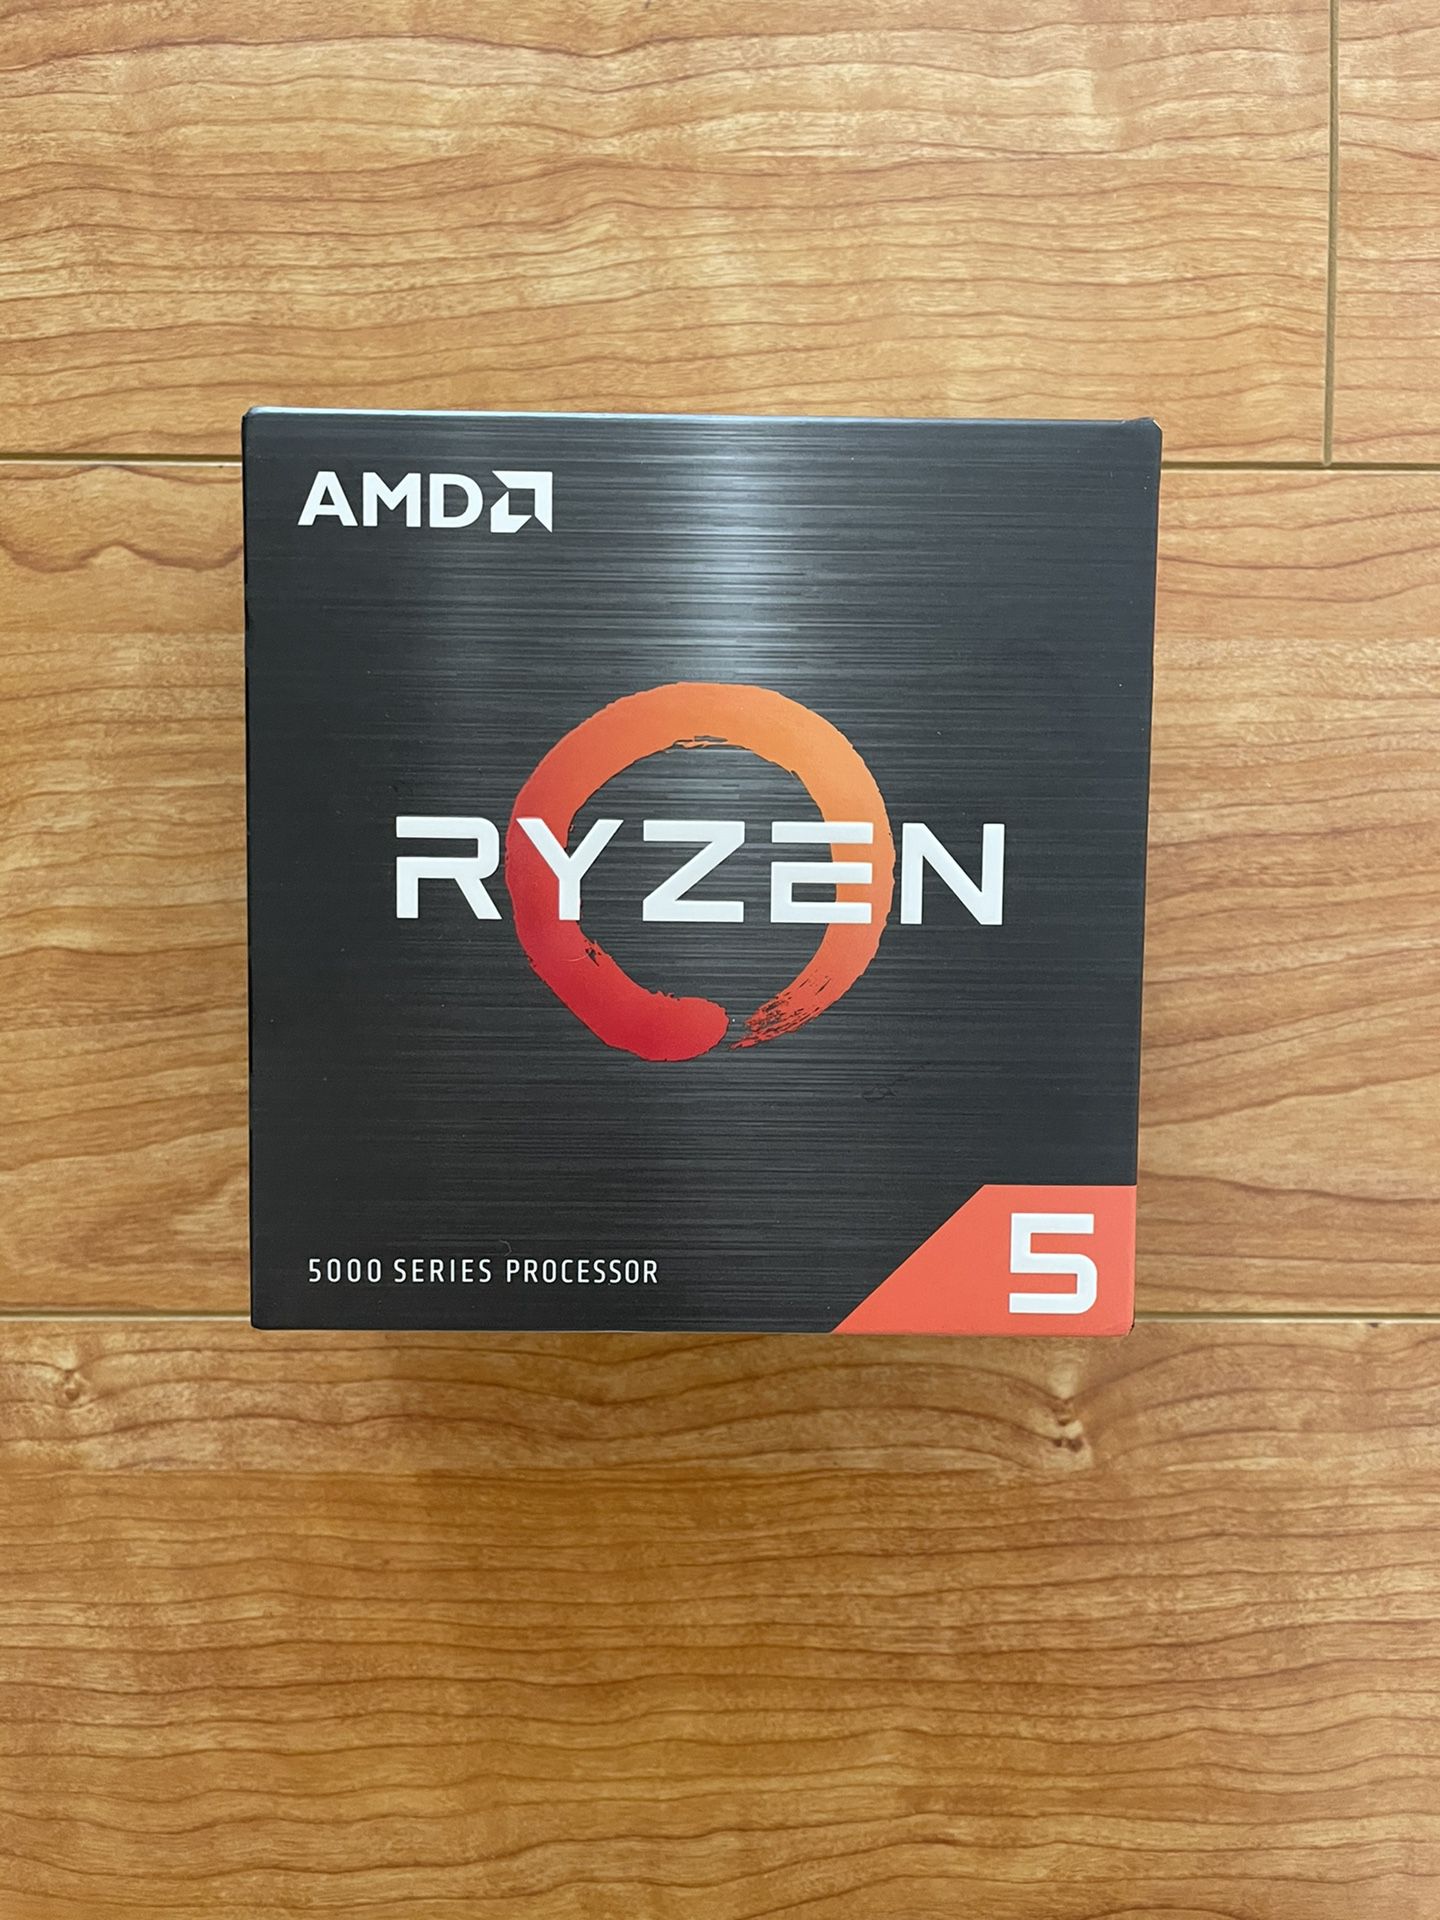 AMD Ryzen 5 5600X 6-core 12-Thread Desktop Processor with Wraith Stealth Cooler